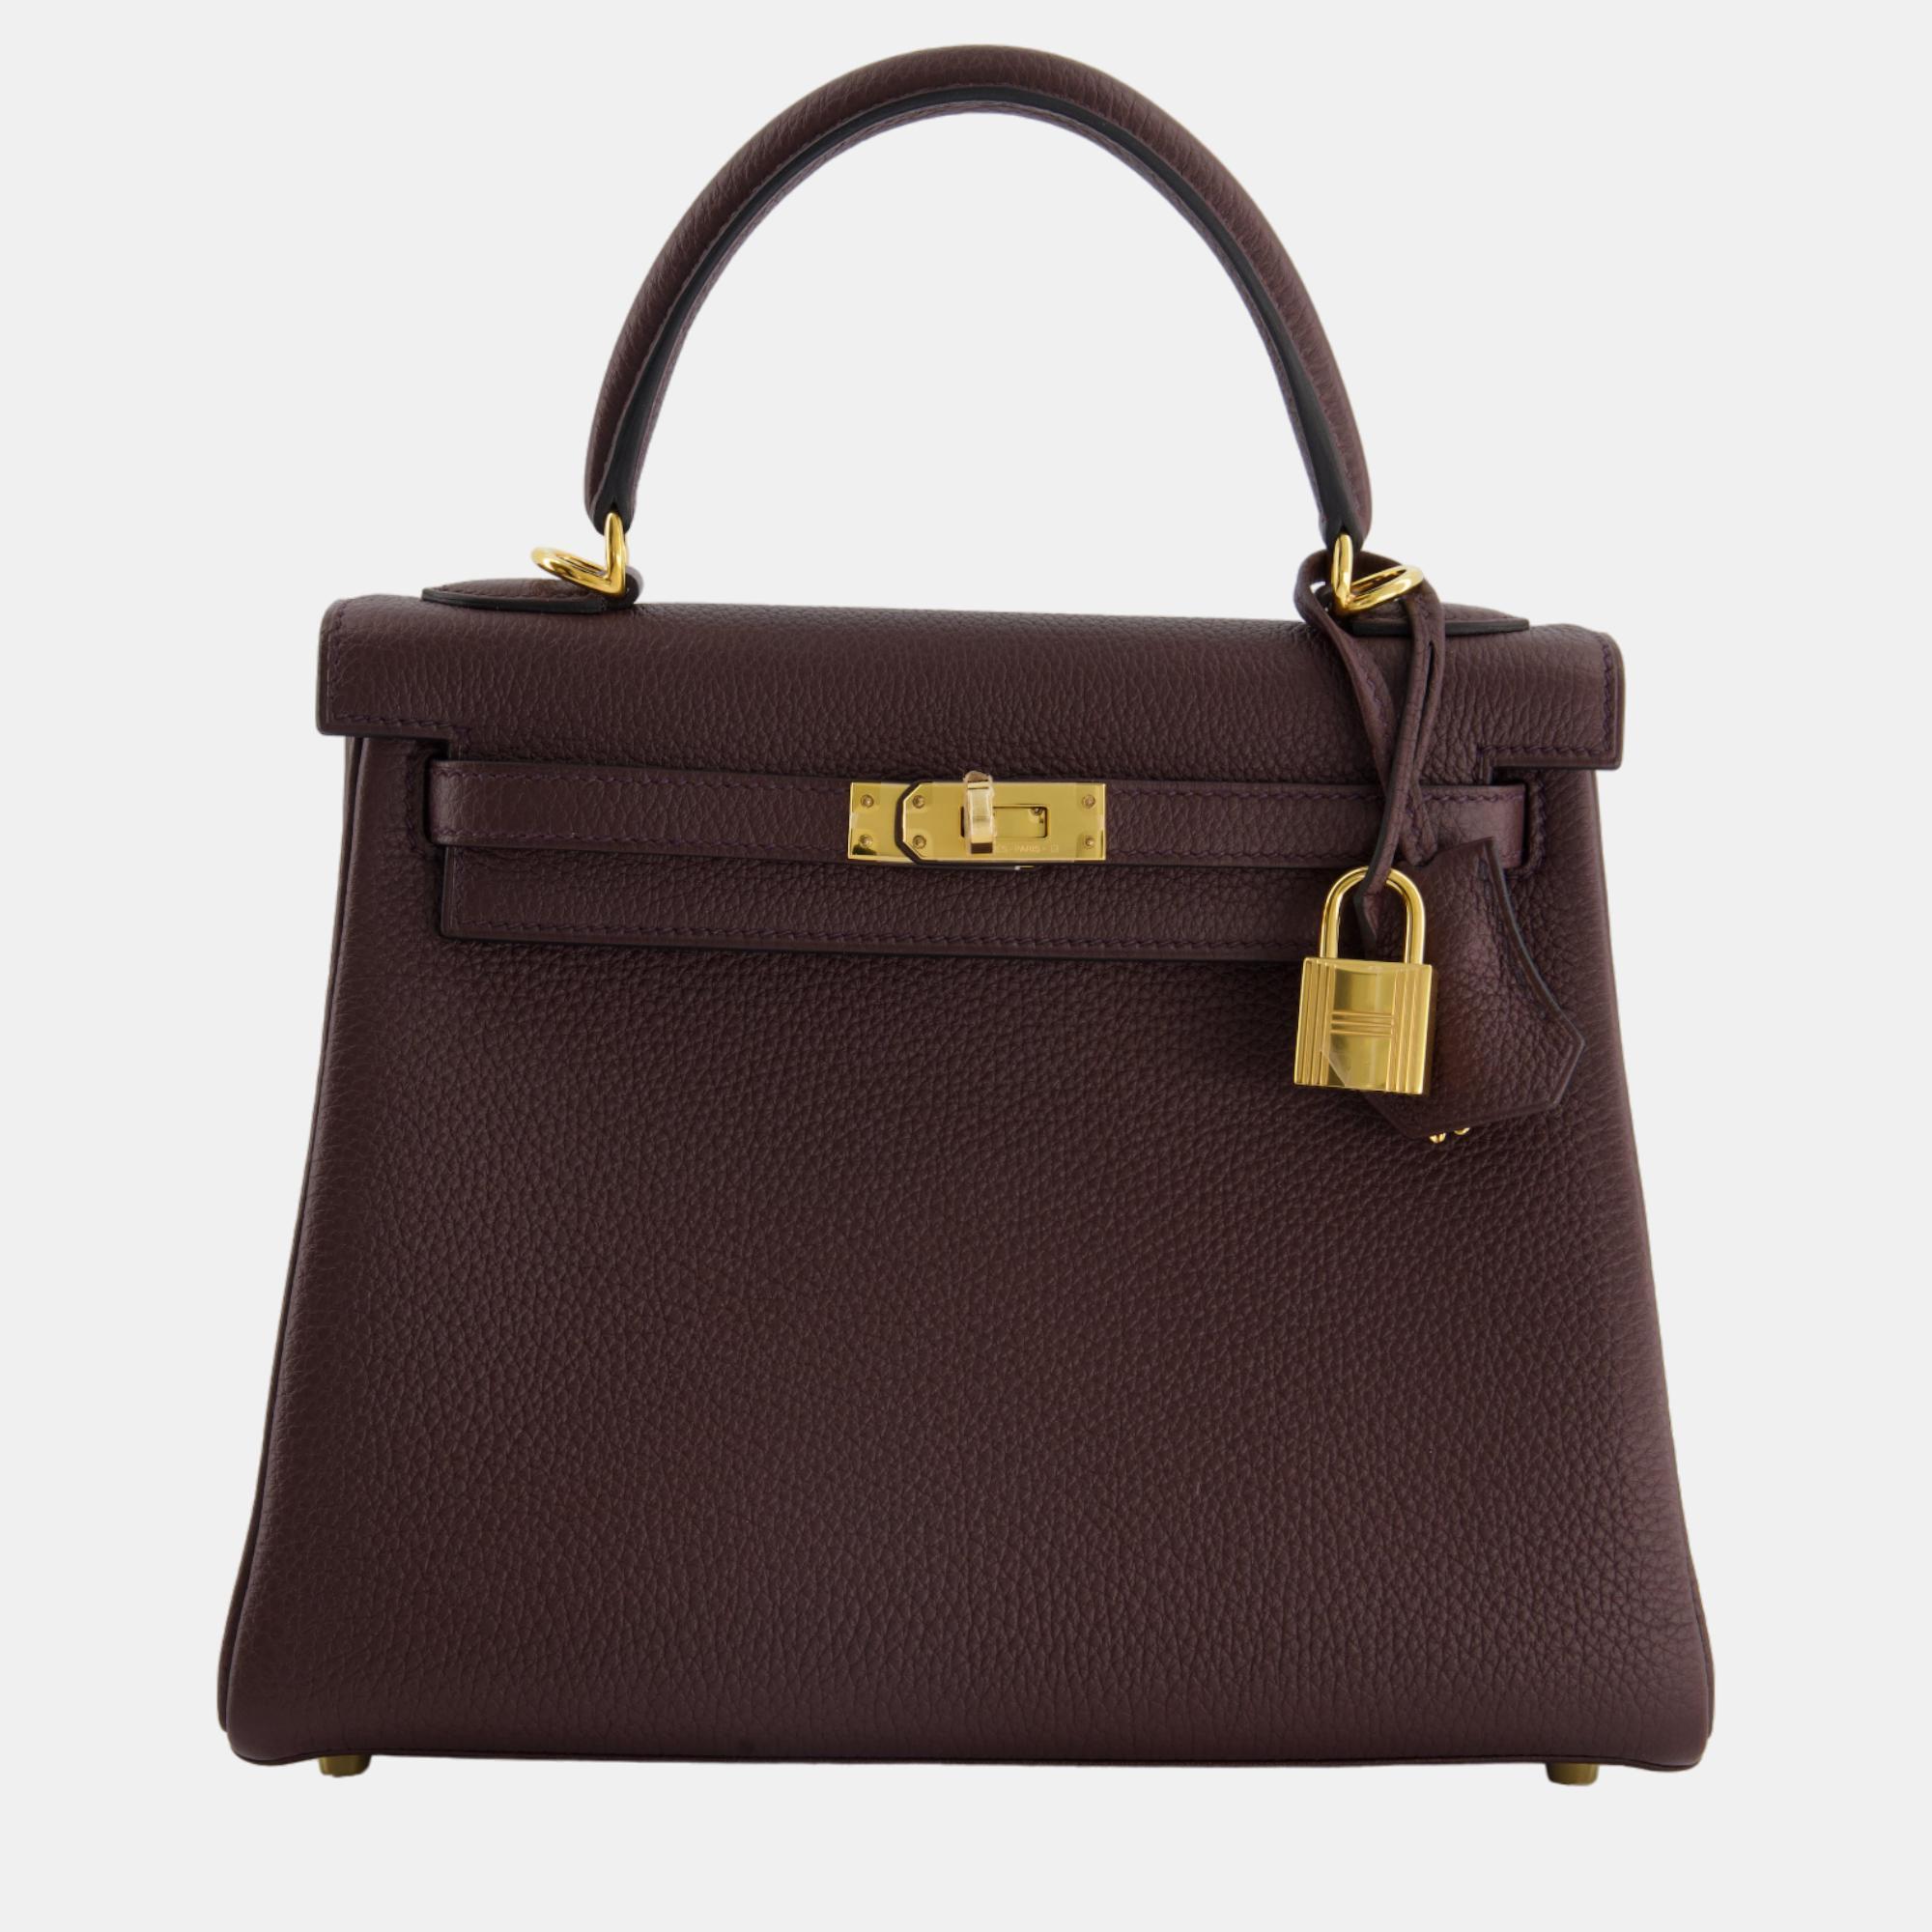 Hermes Kelly Retourne Bag 25cm In Rouge  Togo Leather With Gold Hardware